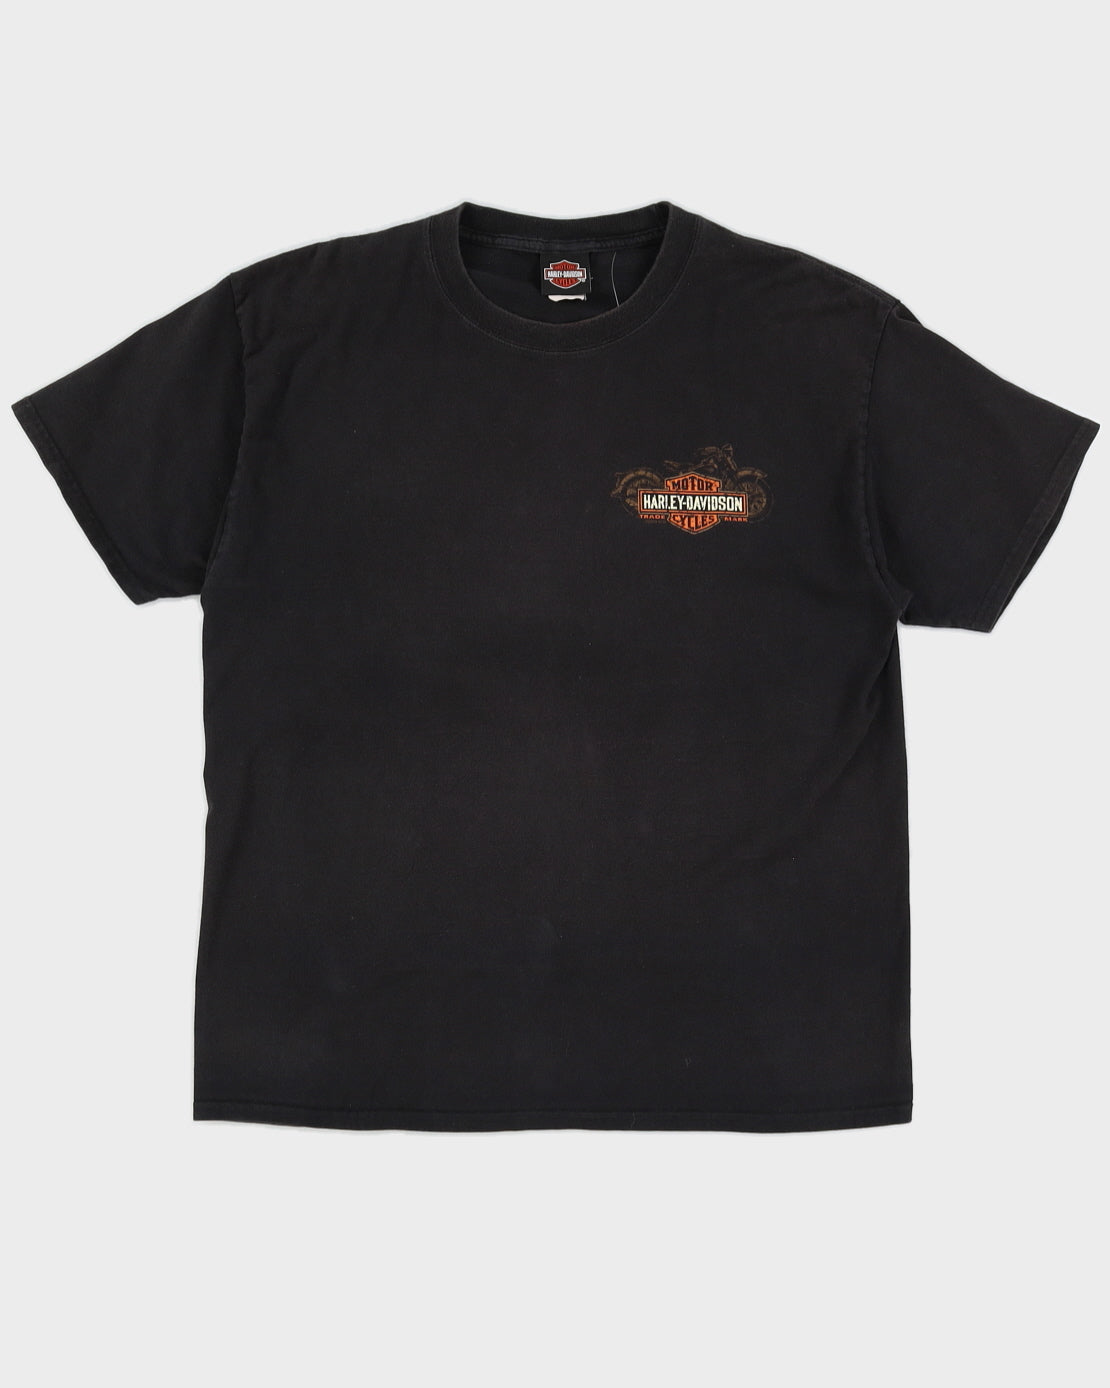 Harley Davidson Black Graphic T-Shirt - L